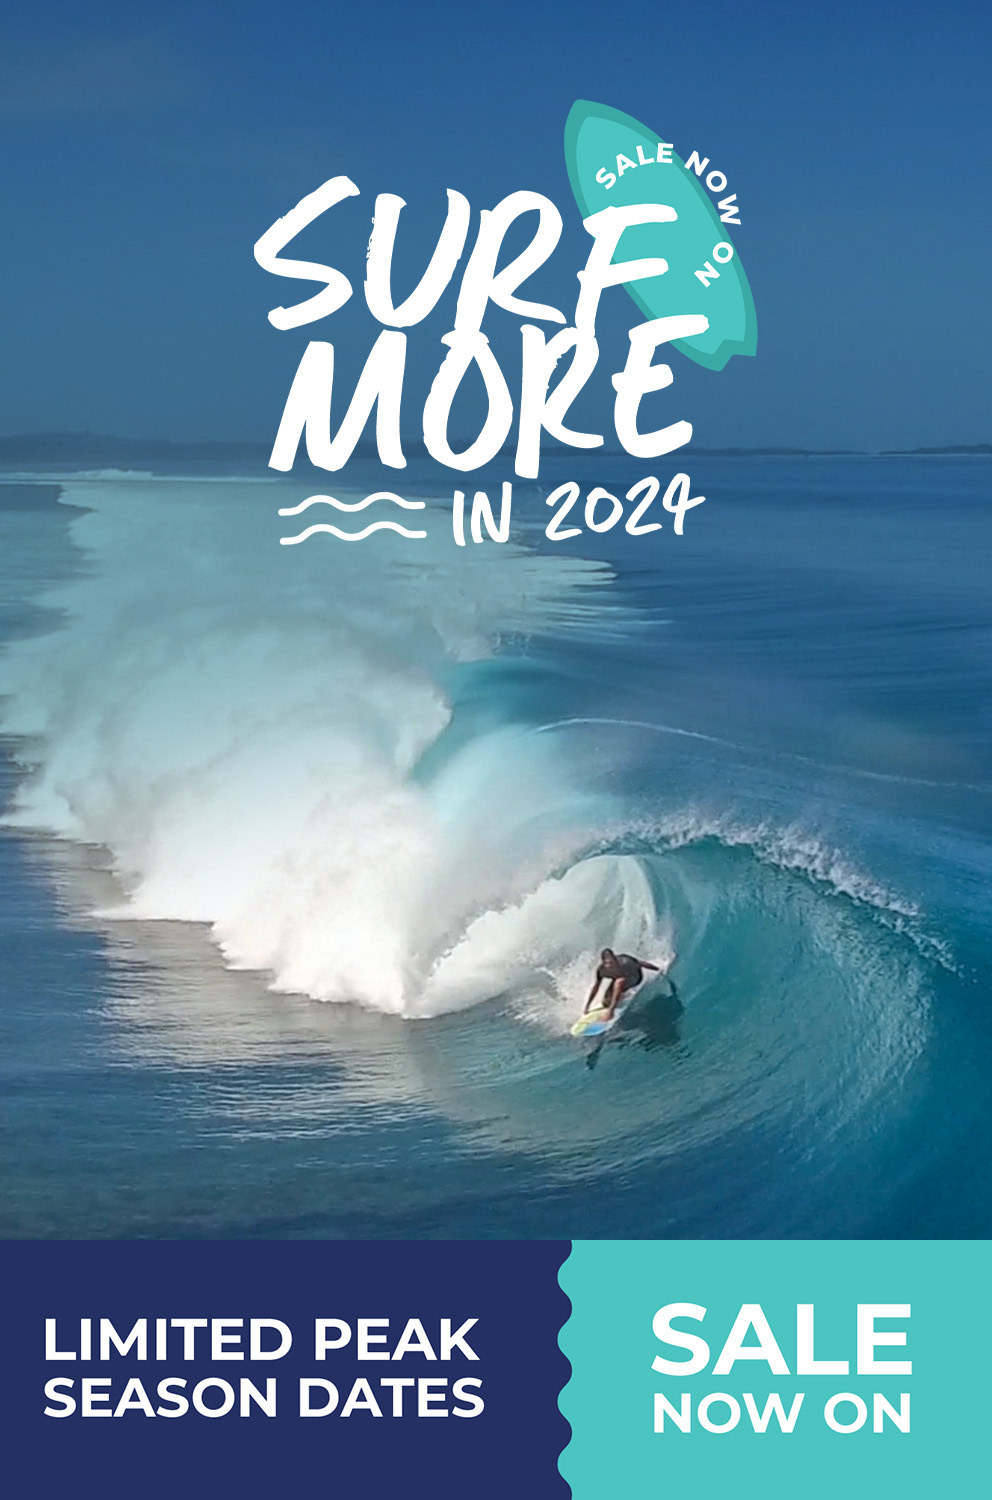 Mentawai surf charters